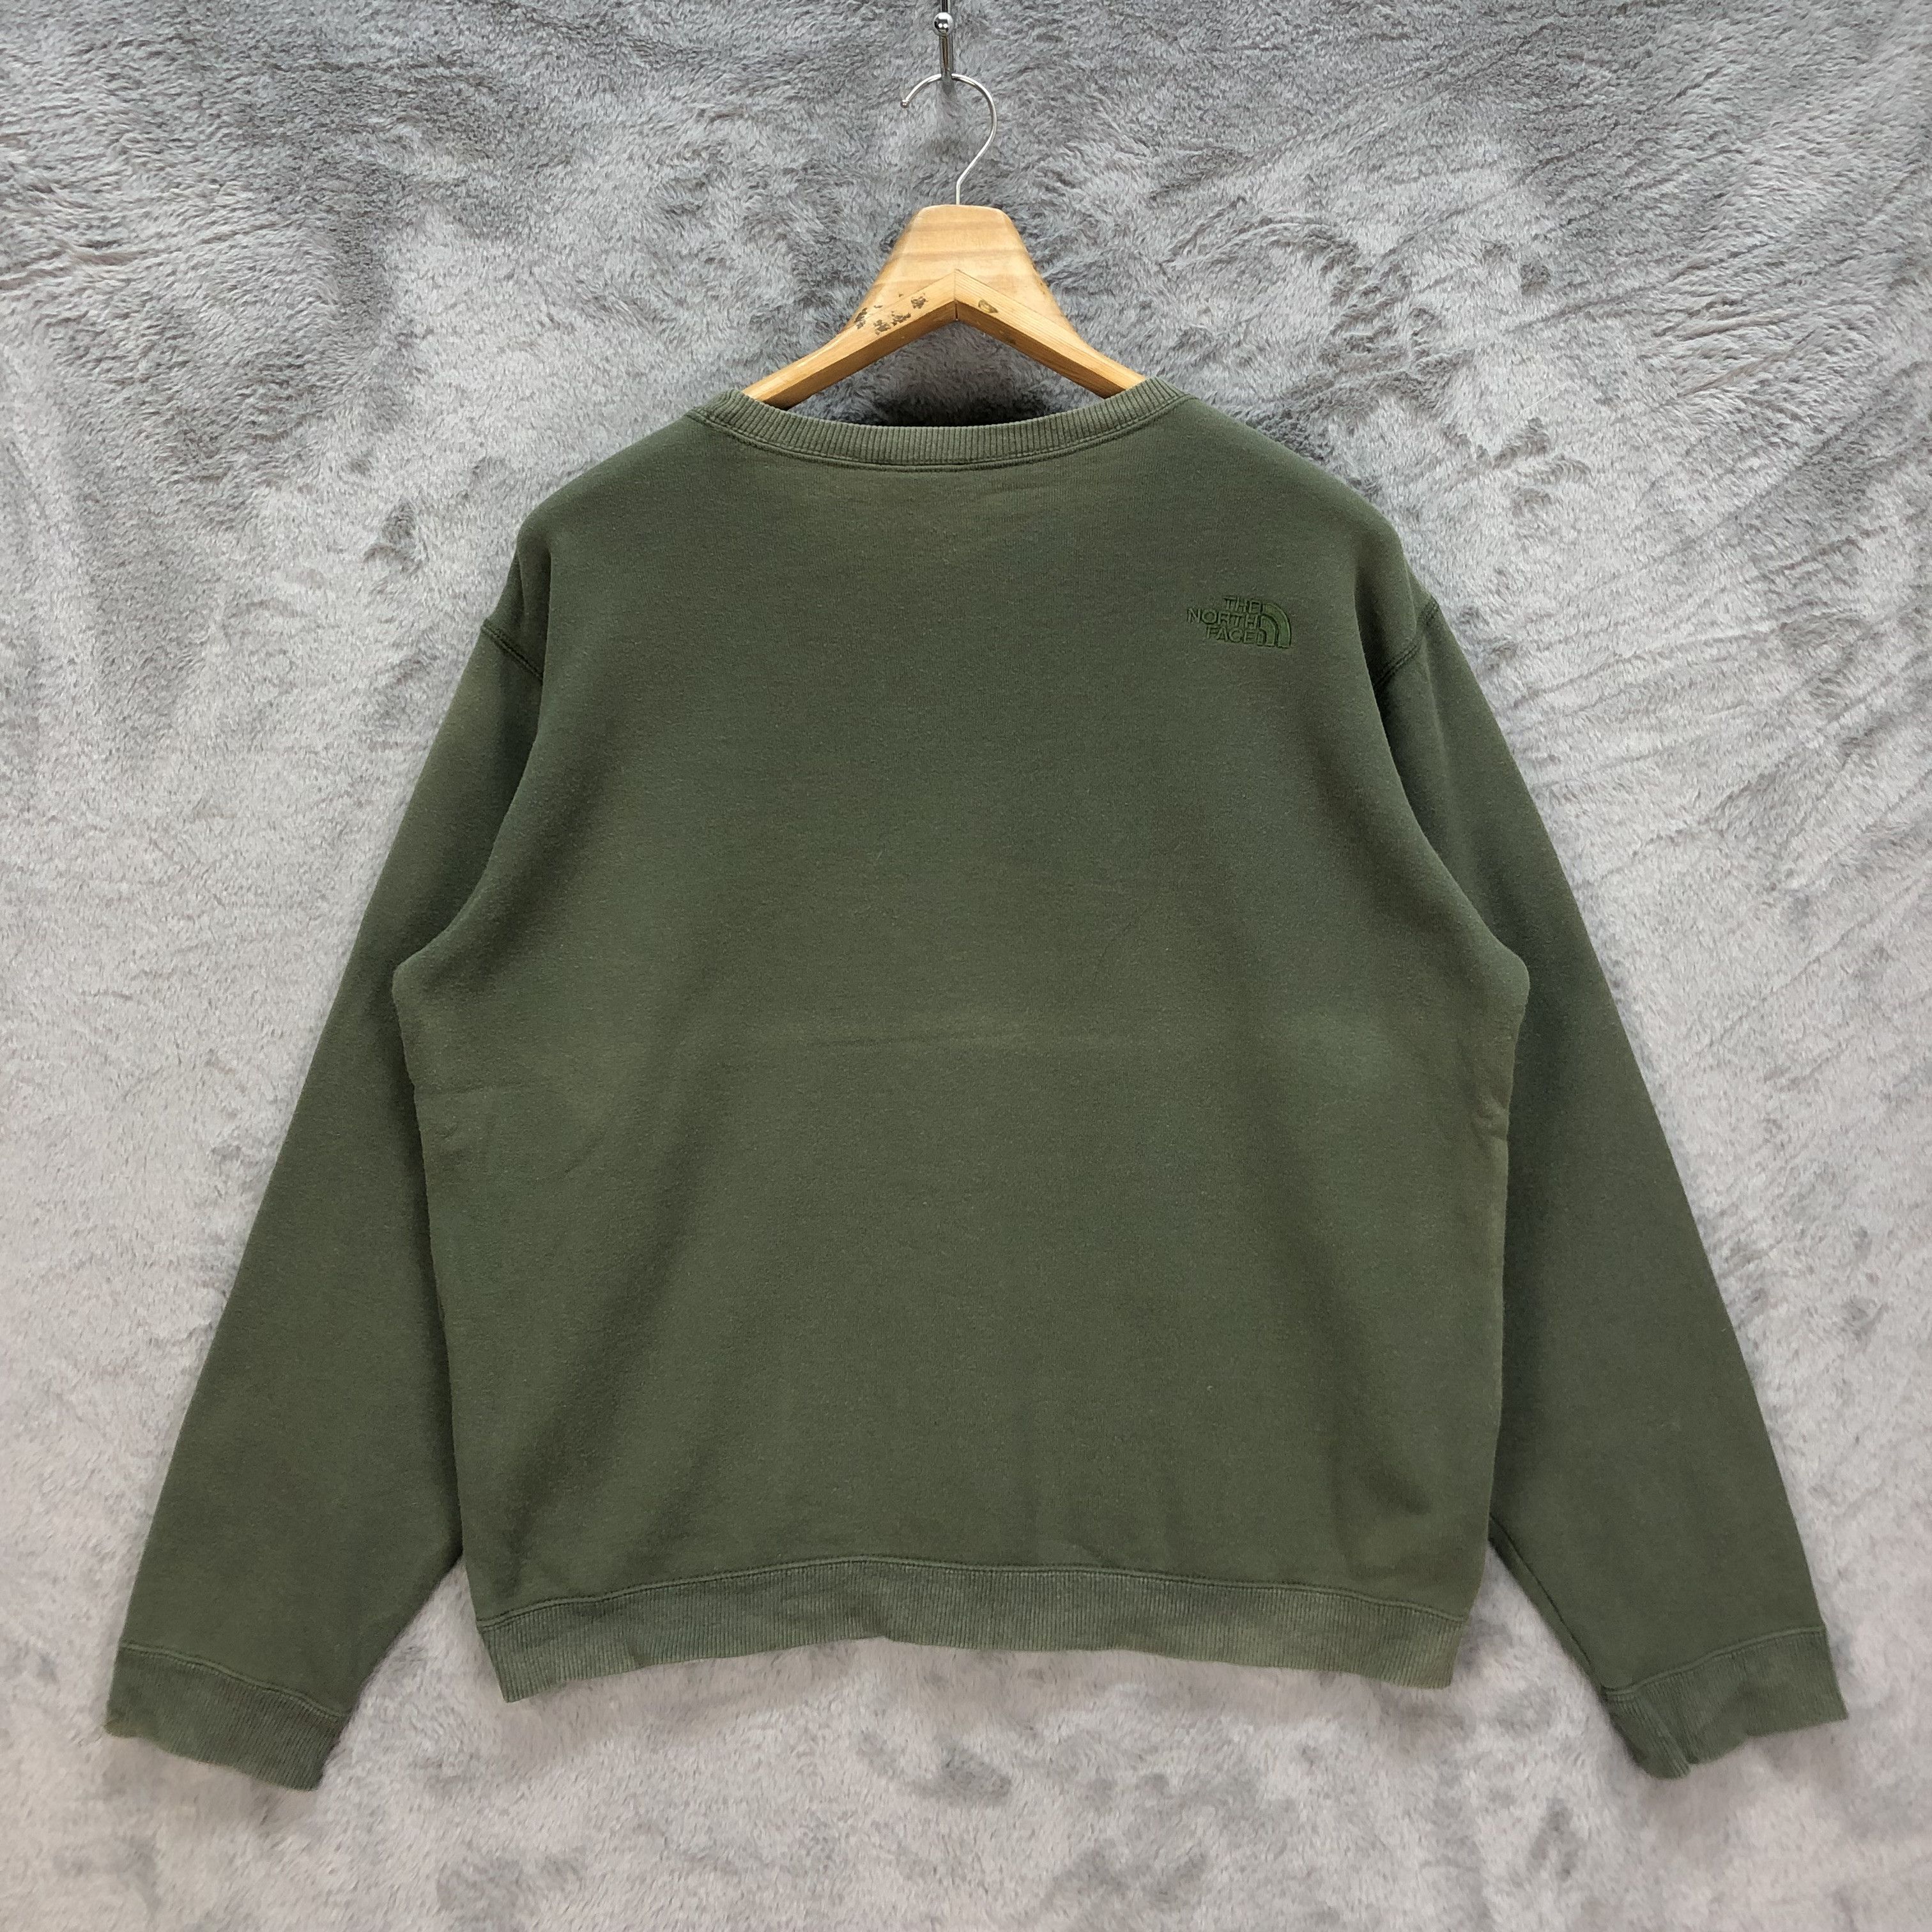 TNF Army Green Sweatshirts #6441-67 - 10